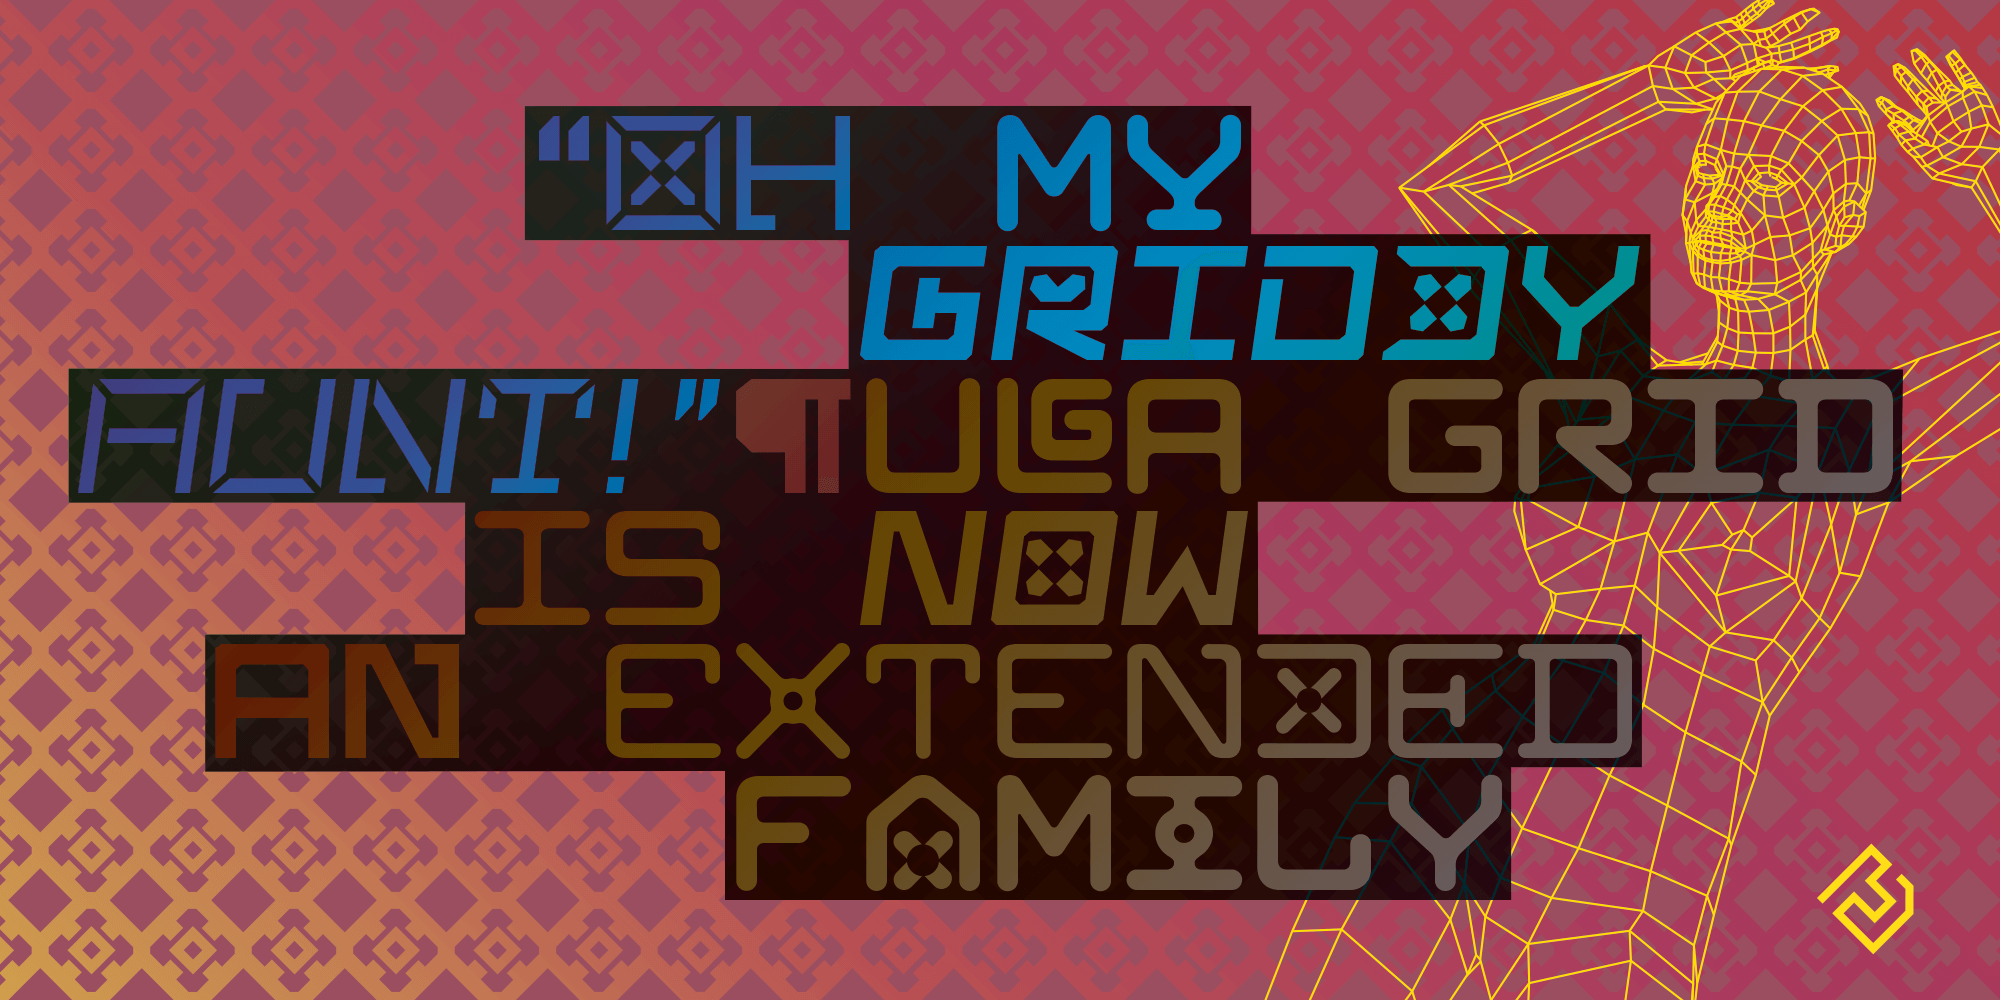 ULGA Grid monospaced typeface family